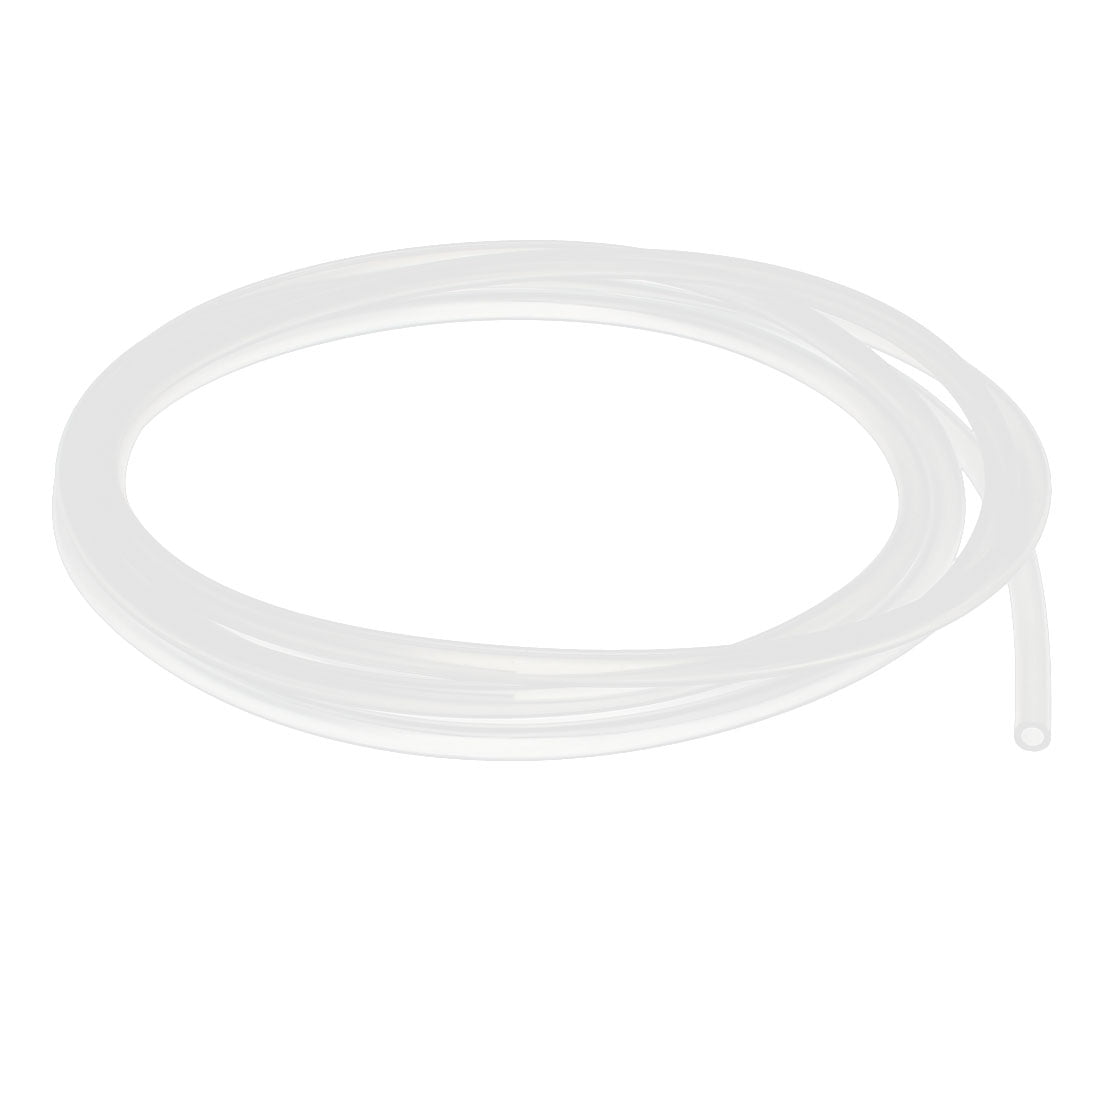 3mm I.D Food Safe Grade PVC Clear Tube Plastic Hose Pipe 1/8" inch 